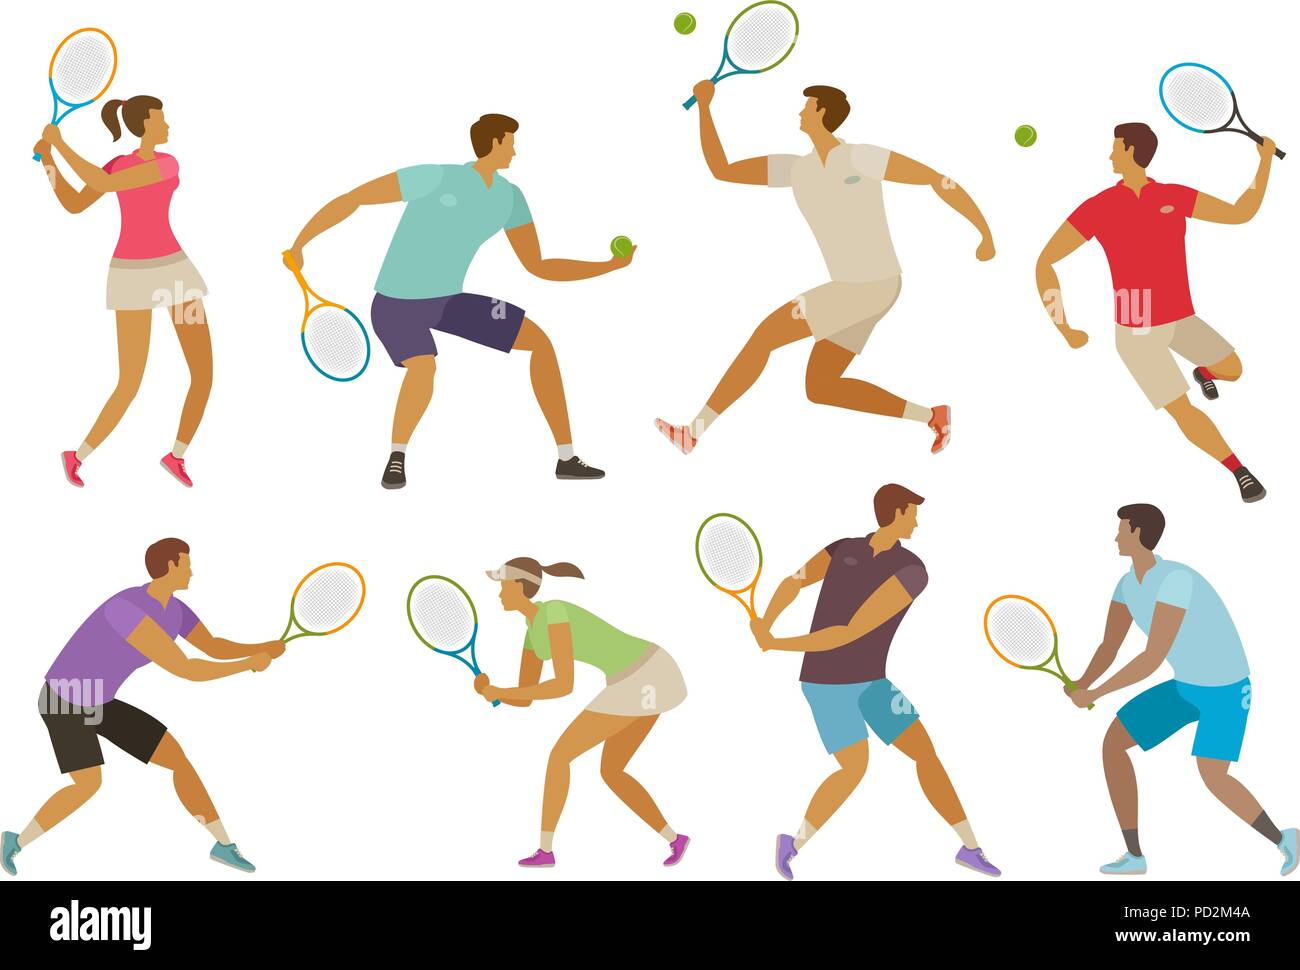 Tennis player with tennis racket. Sport concept. Funny cartoon vector illustration Stock Vector